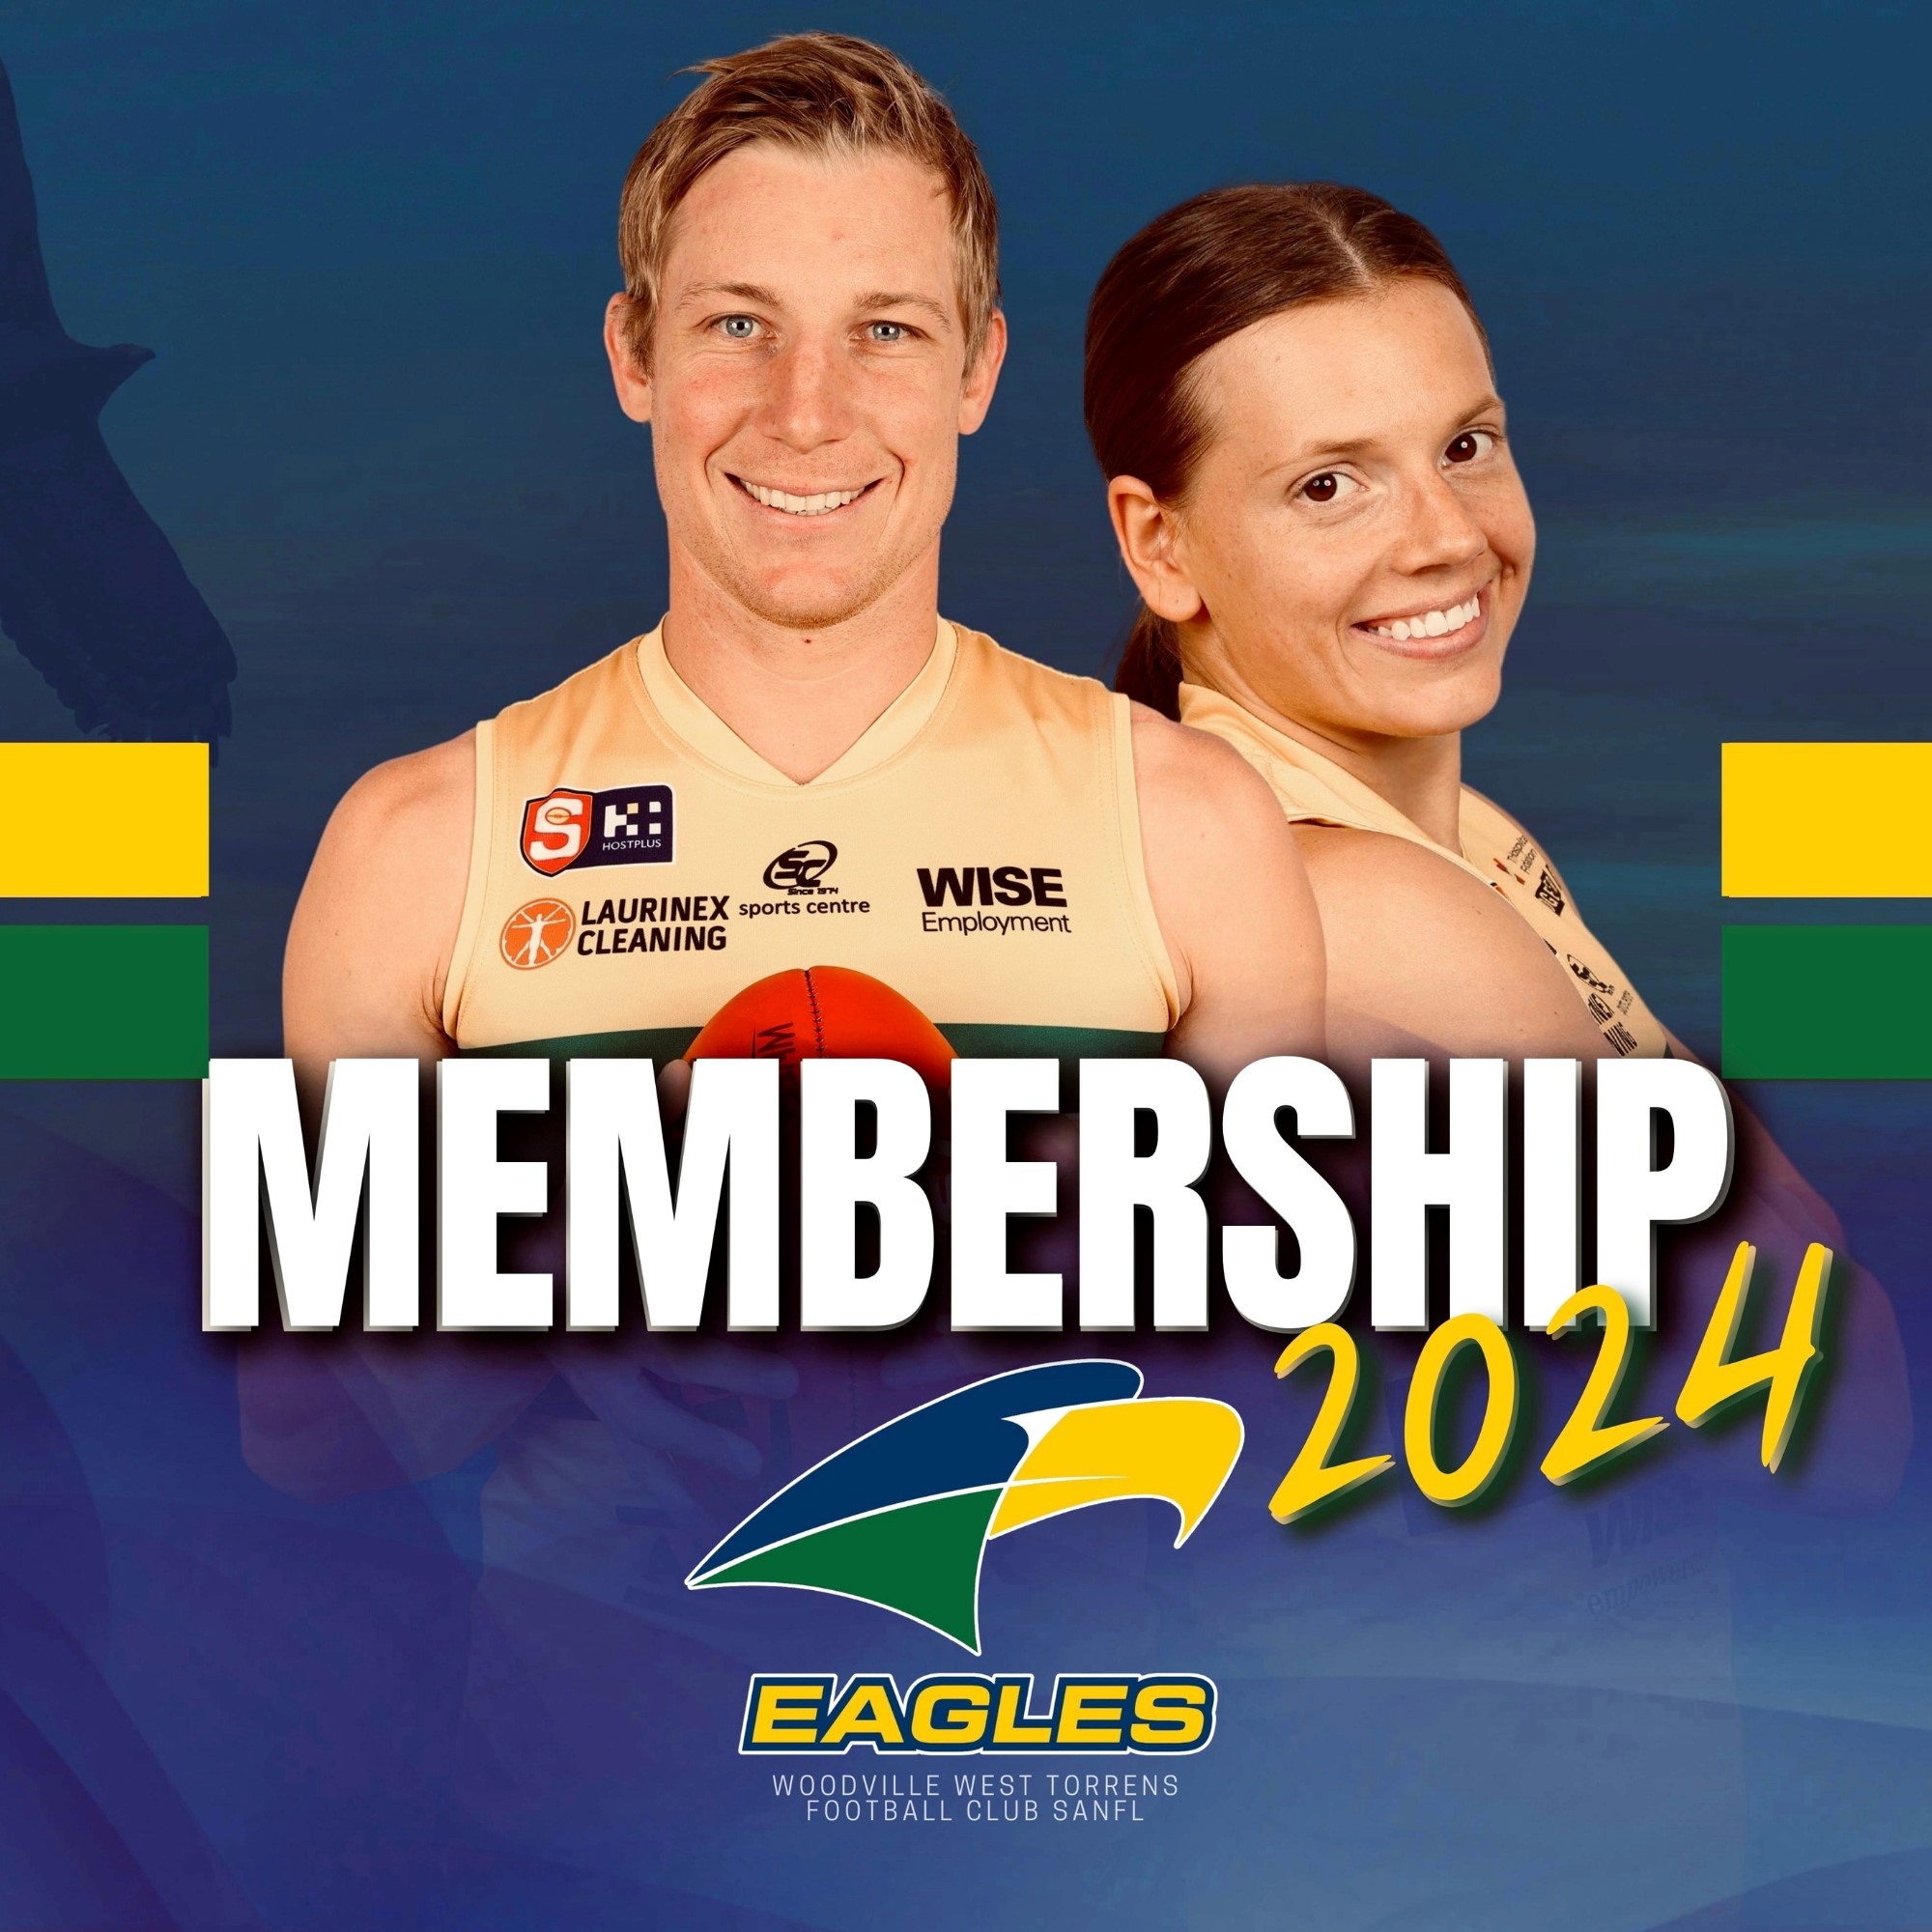 Eagles Women's Home Match membership